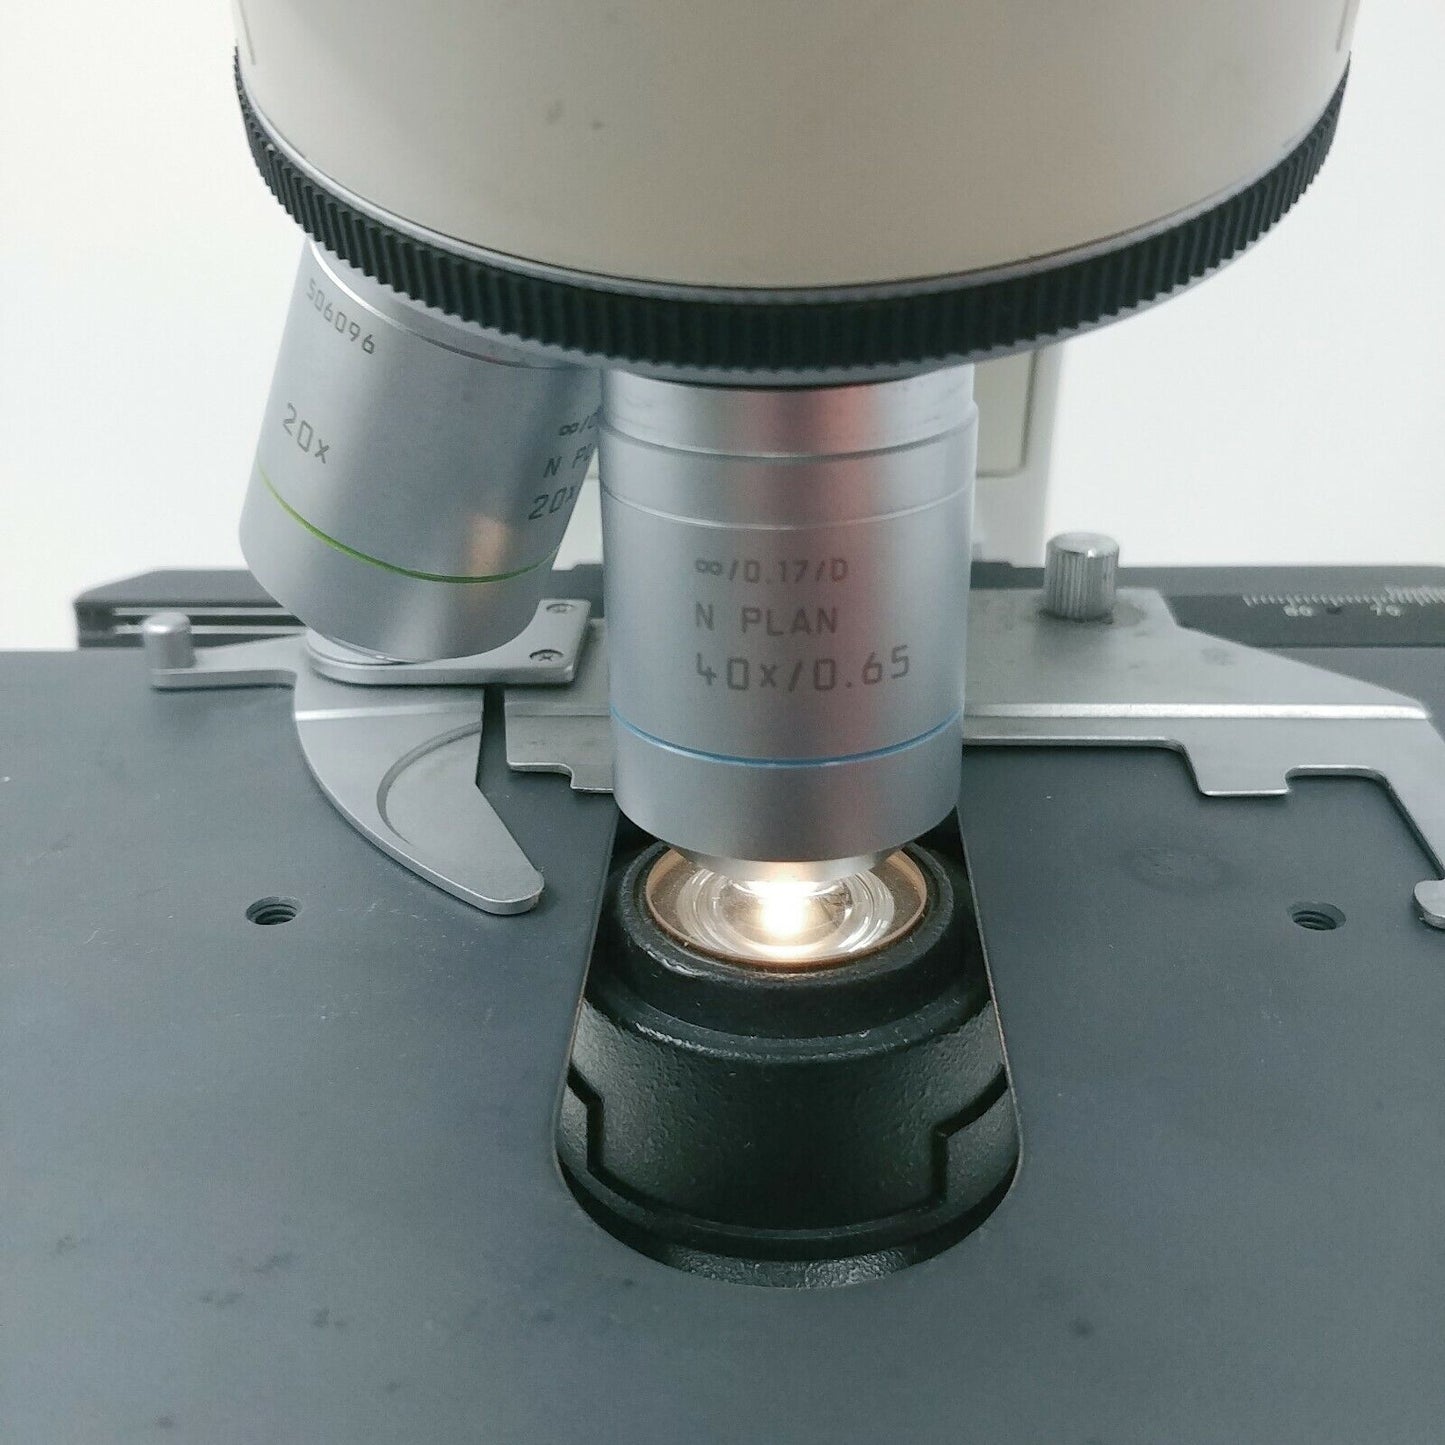 Leica Microscope DMLS with 5x 10x 20x 40x Objectives - microscopemarketplace